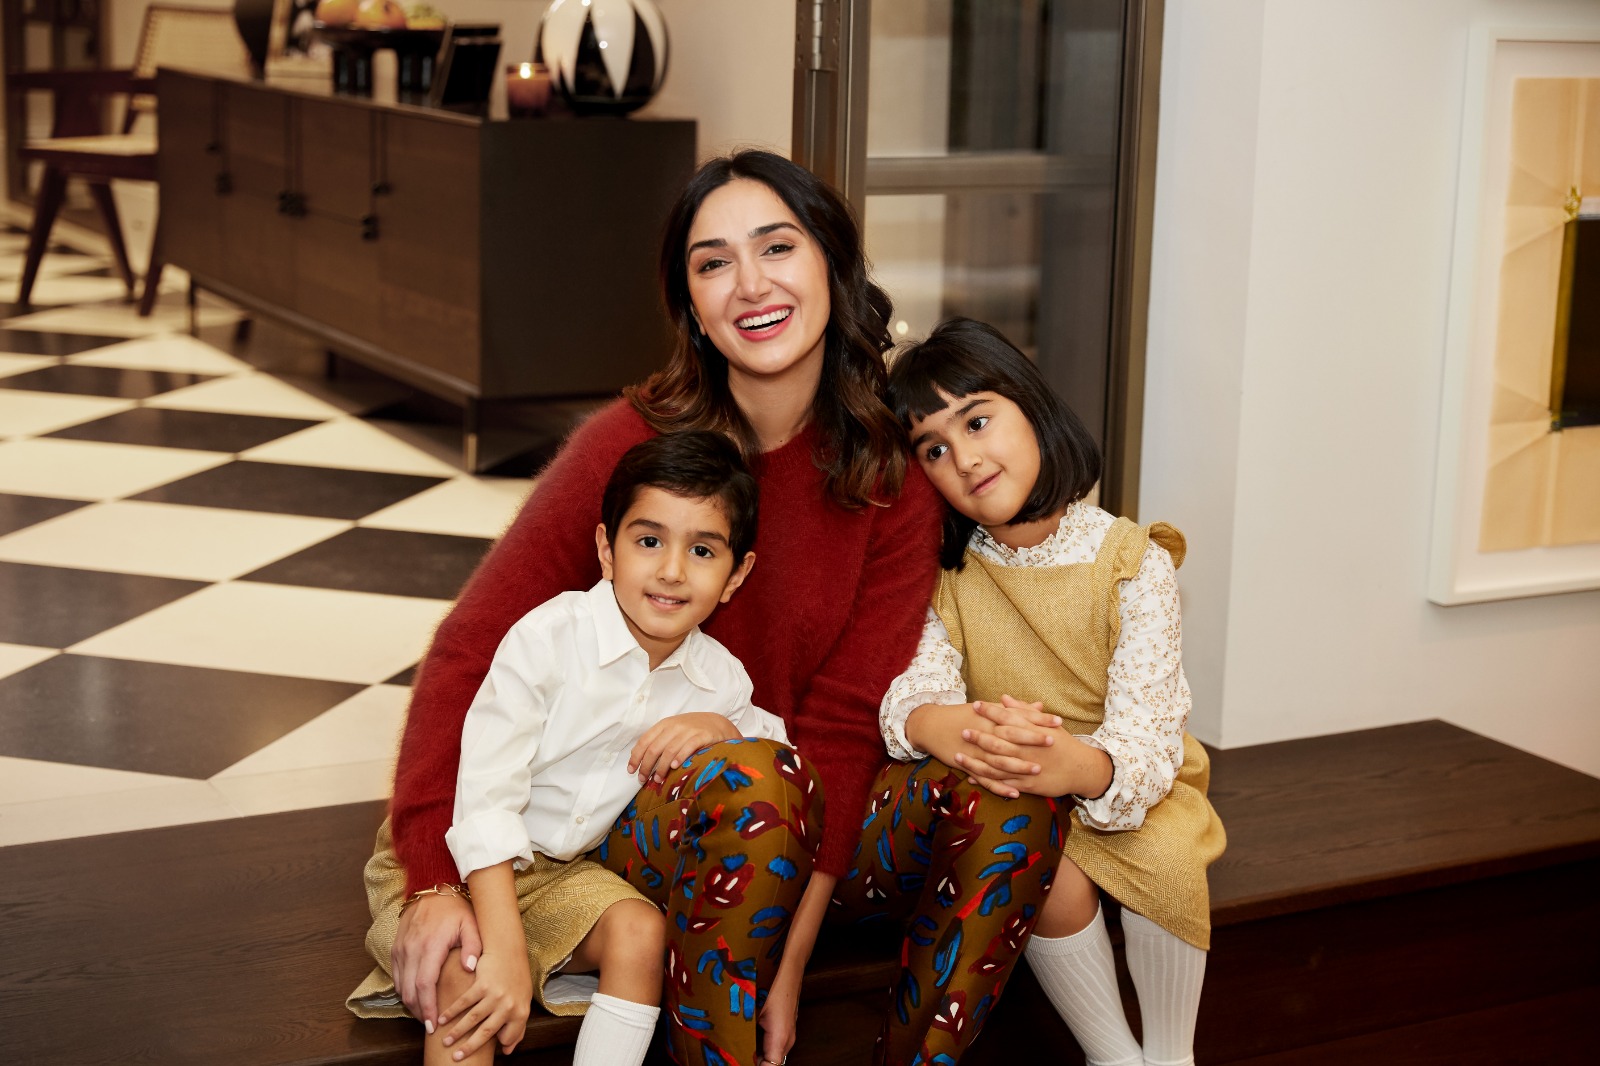 The Wick - Interview Lifestyle entrepreneur Eiesha Bharti Pasricha